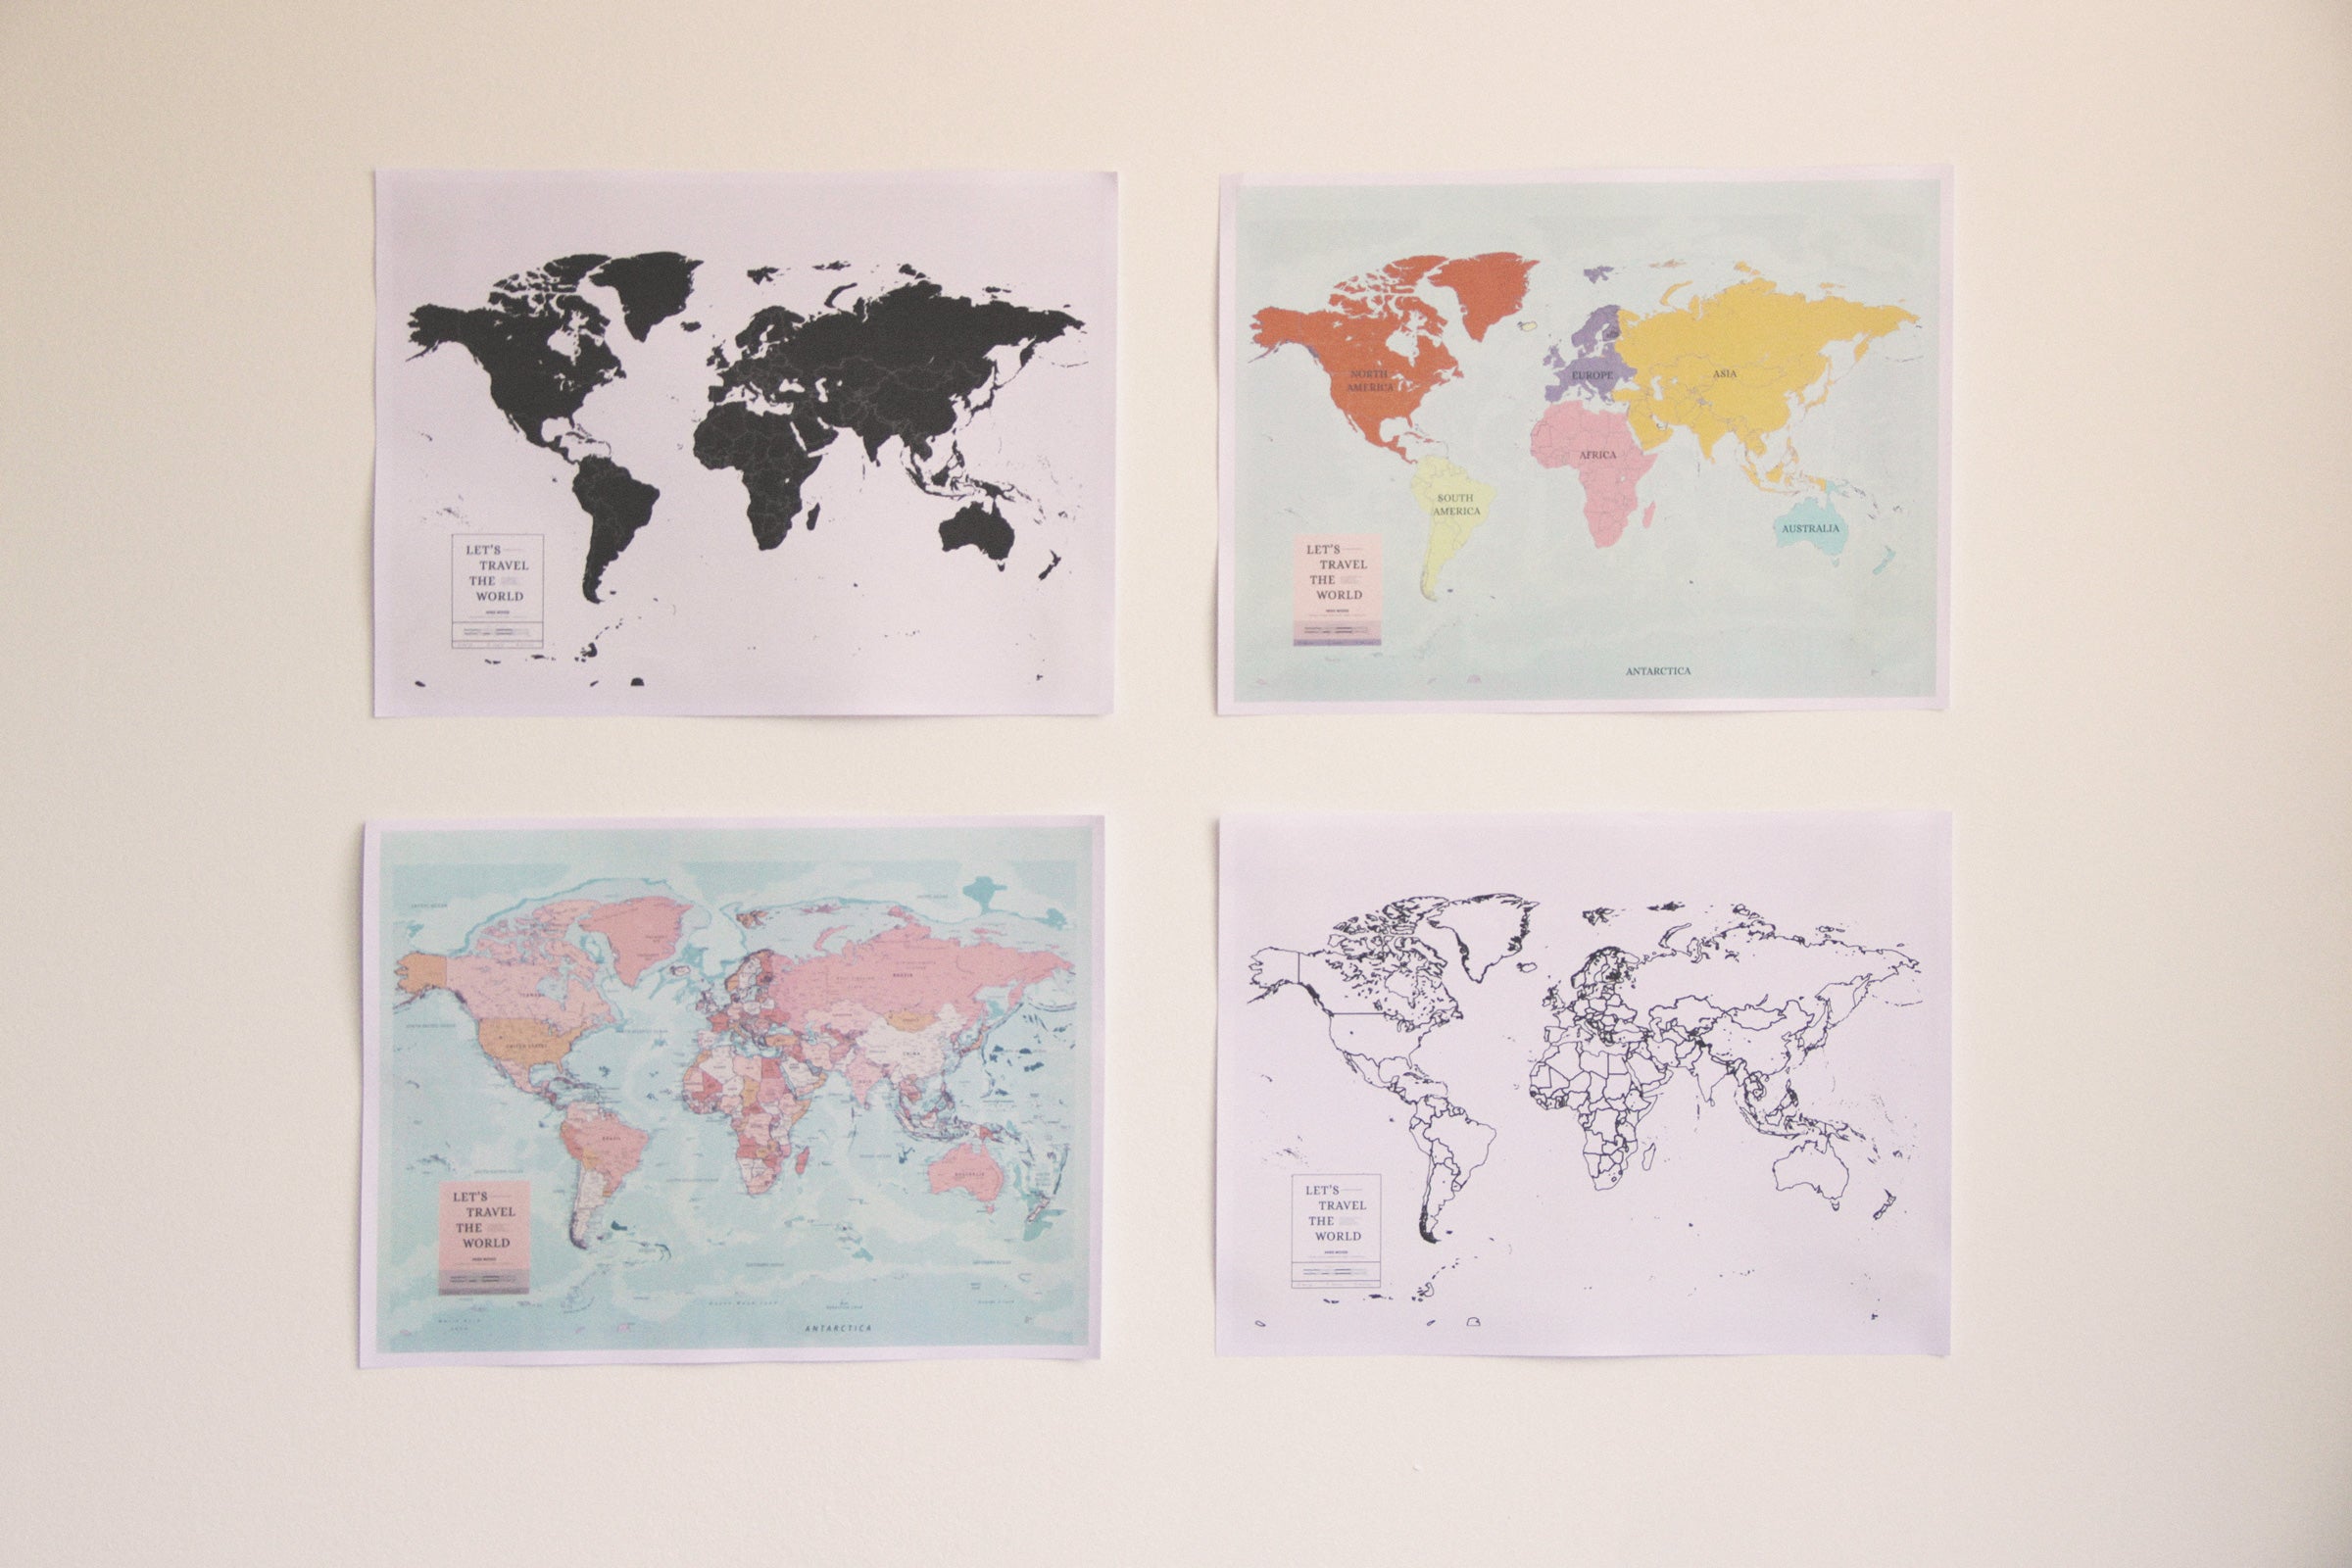 Mapamundi blanco y negro world map art canvas